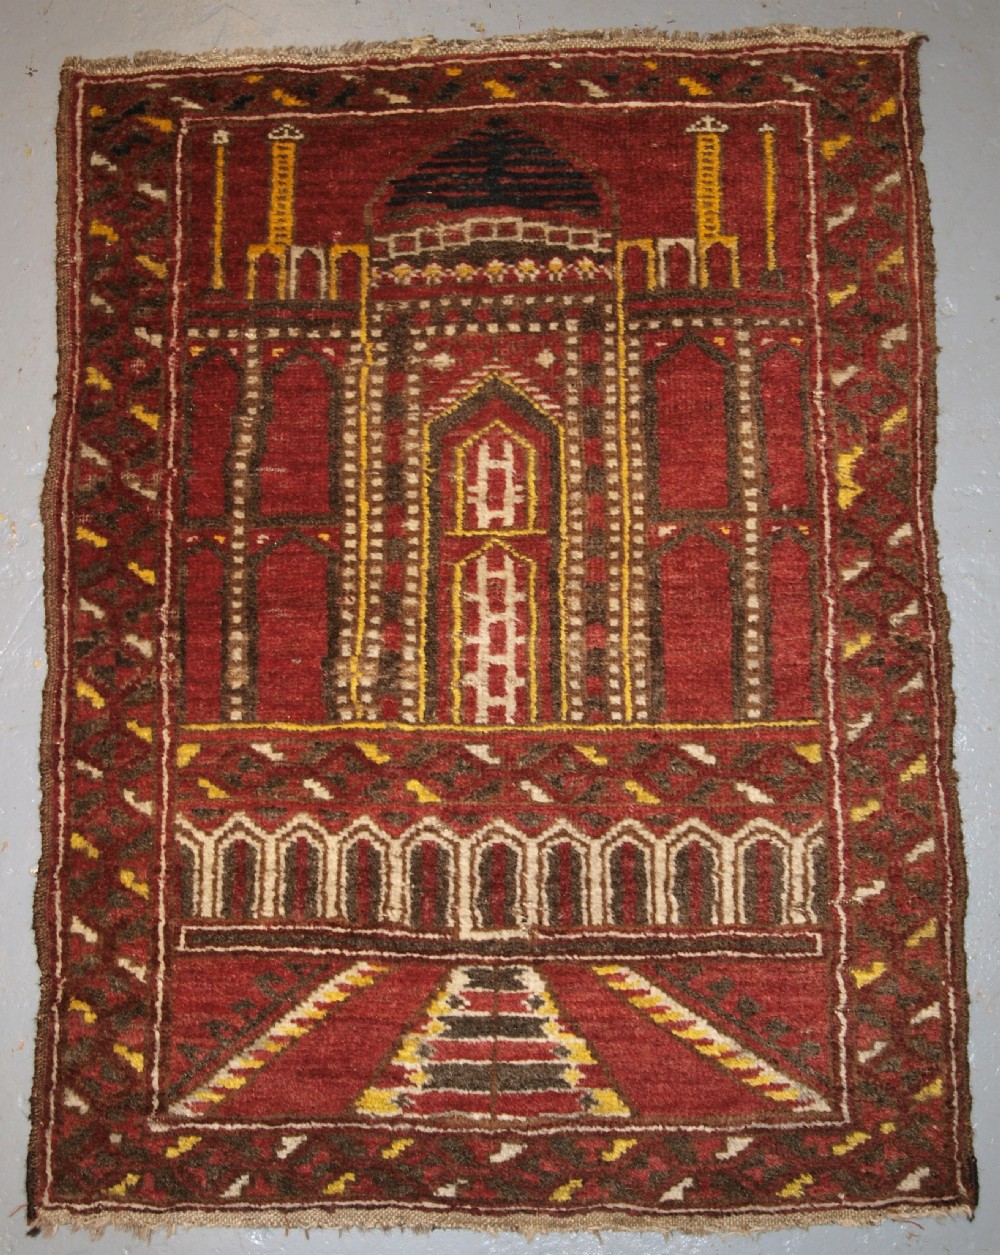 old afghan kizil ayak childs mosque prayer rug scarce example circa 1920